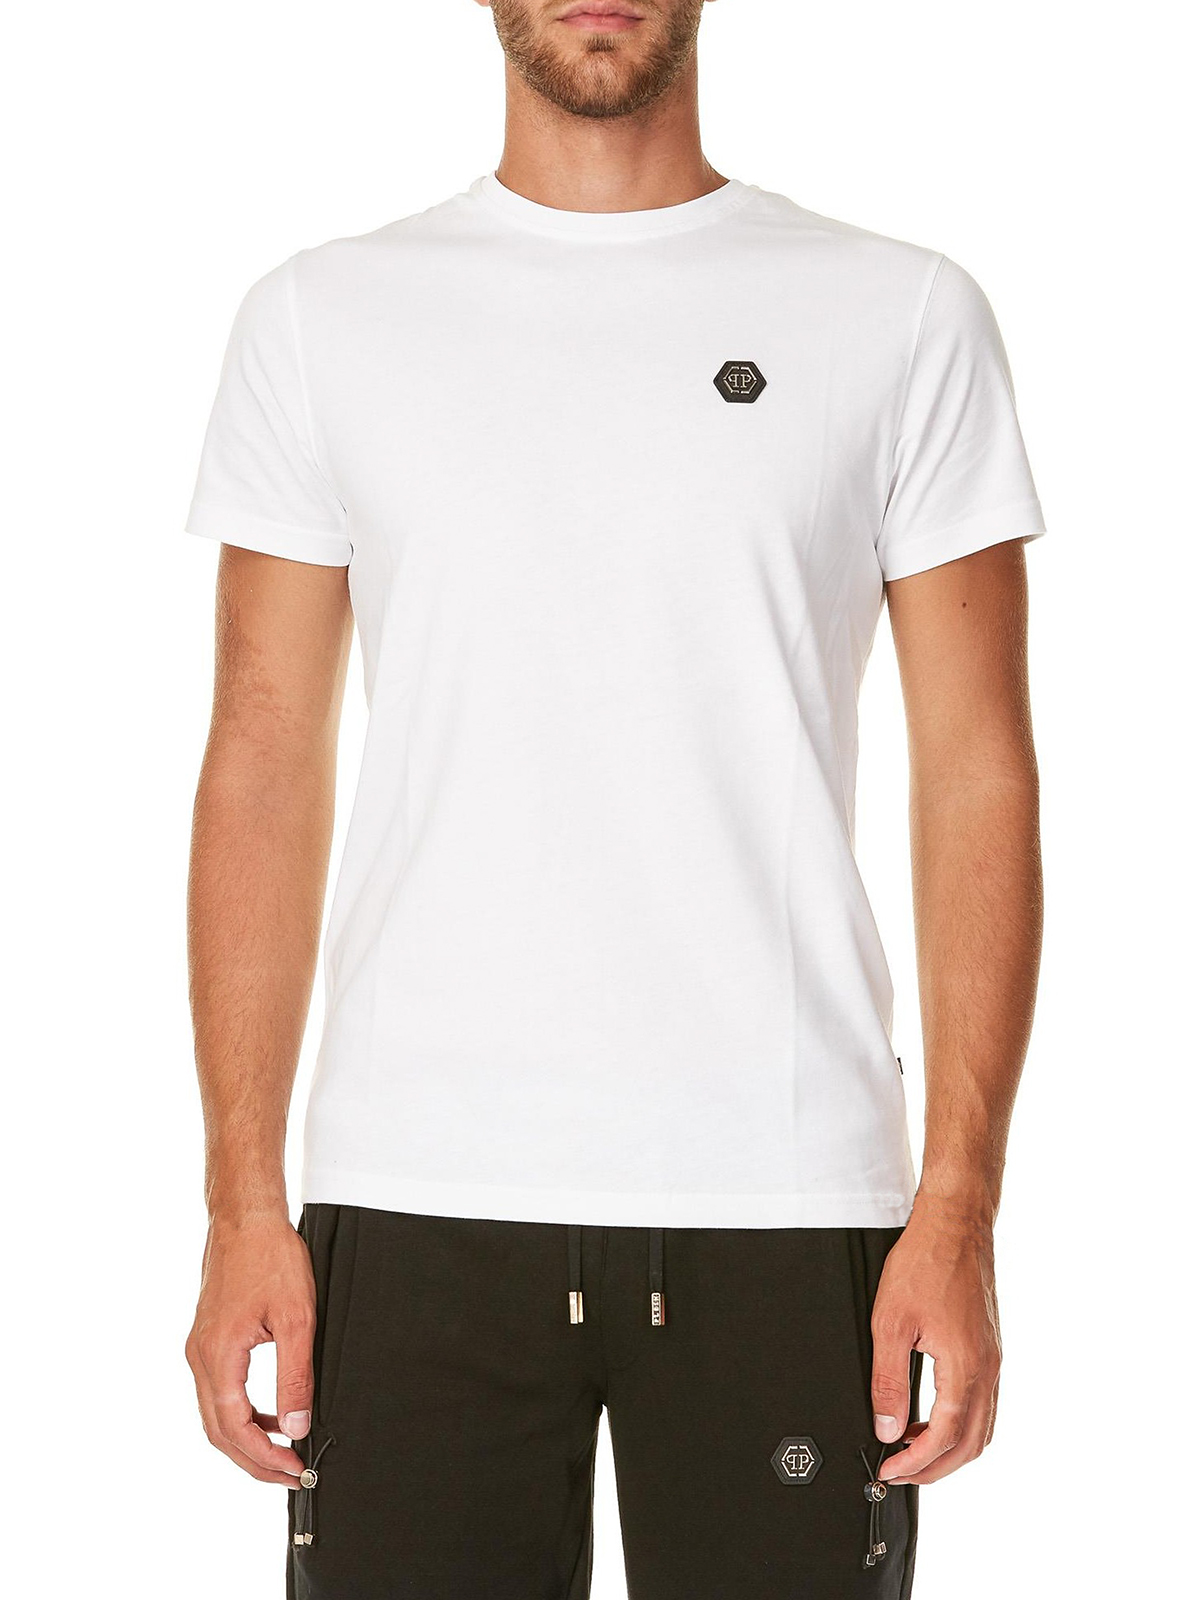 Aanbod Conclusie Bot T-shirts Philipp Plein - Original cotton jersey T-shirt - MTK2557PJY002N01